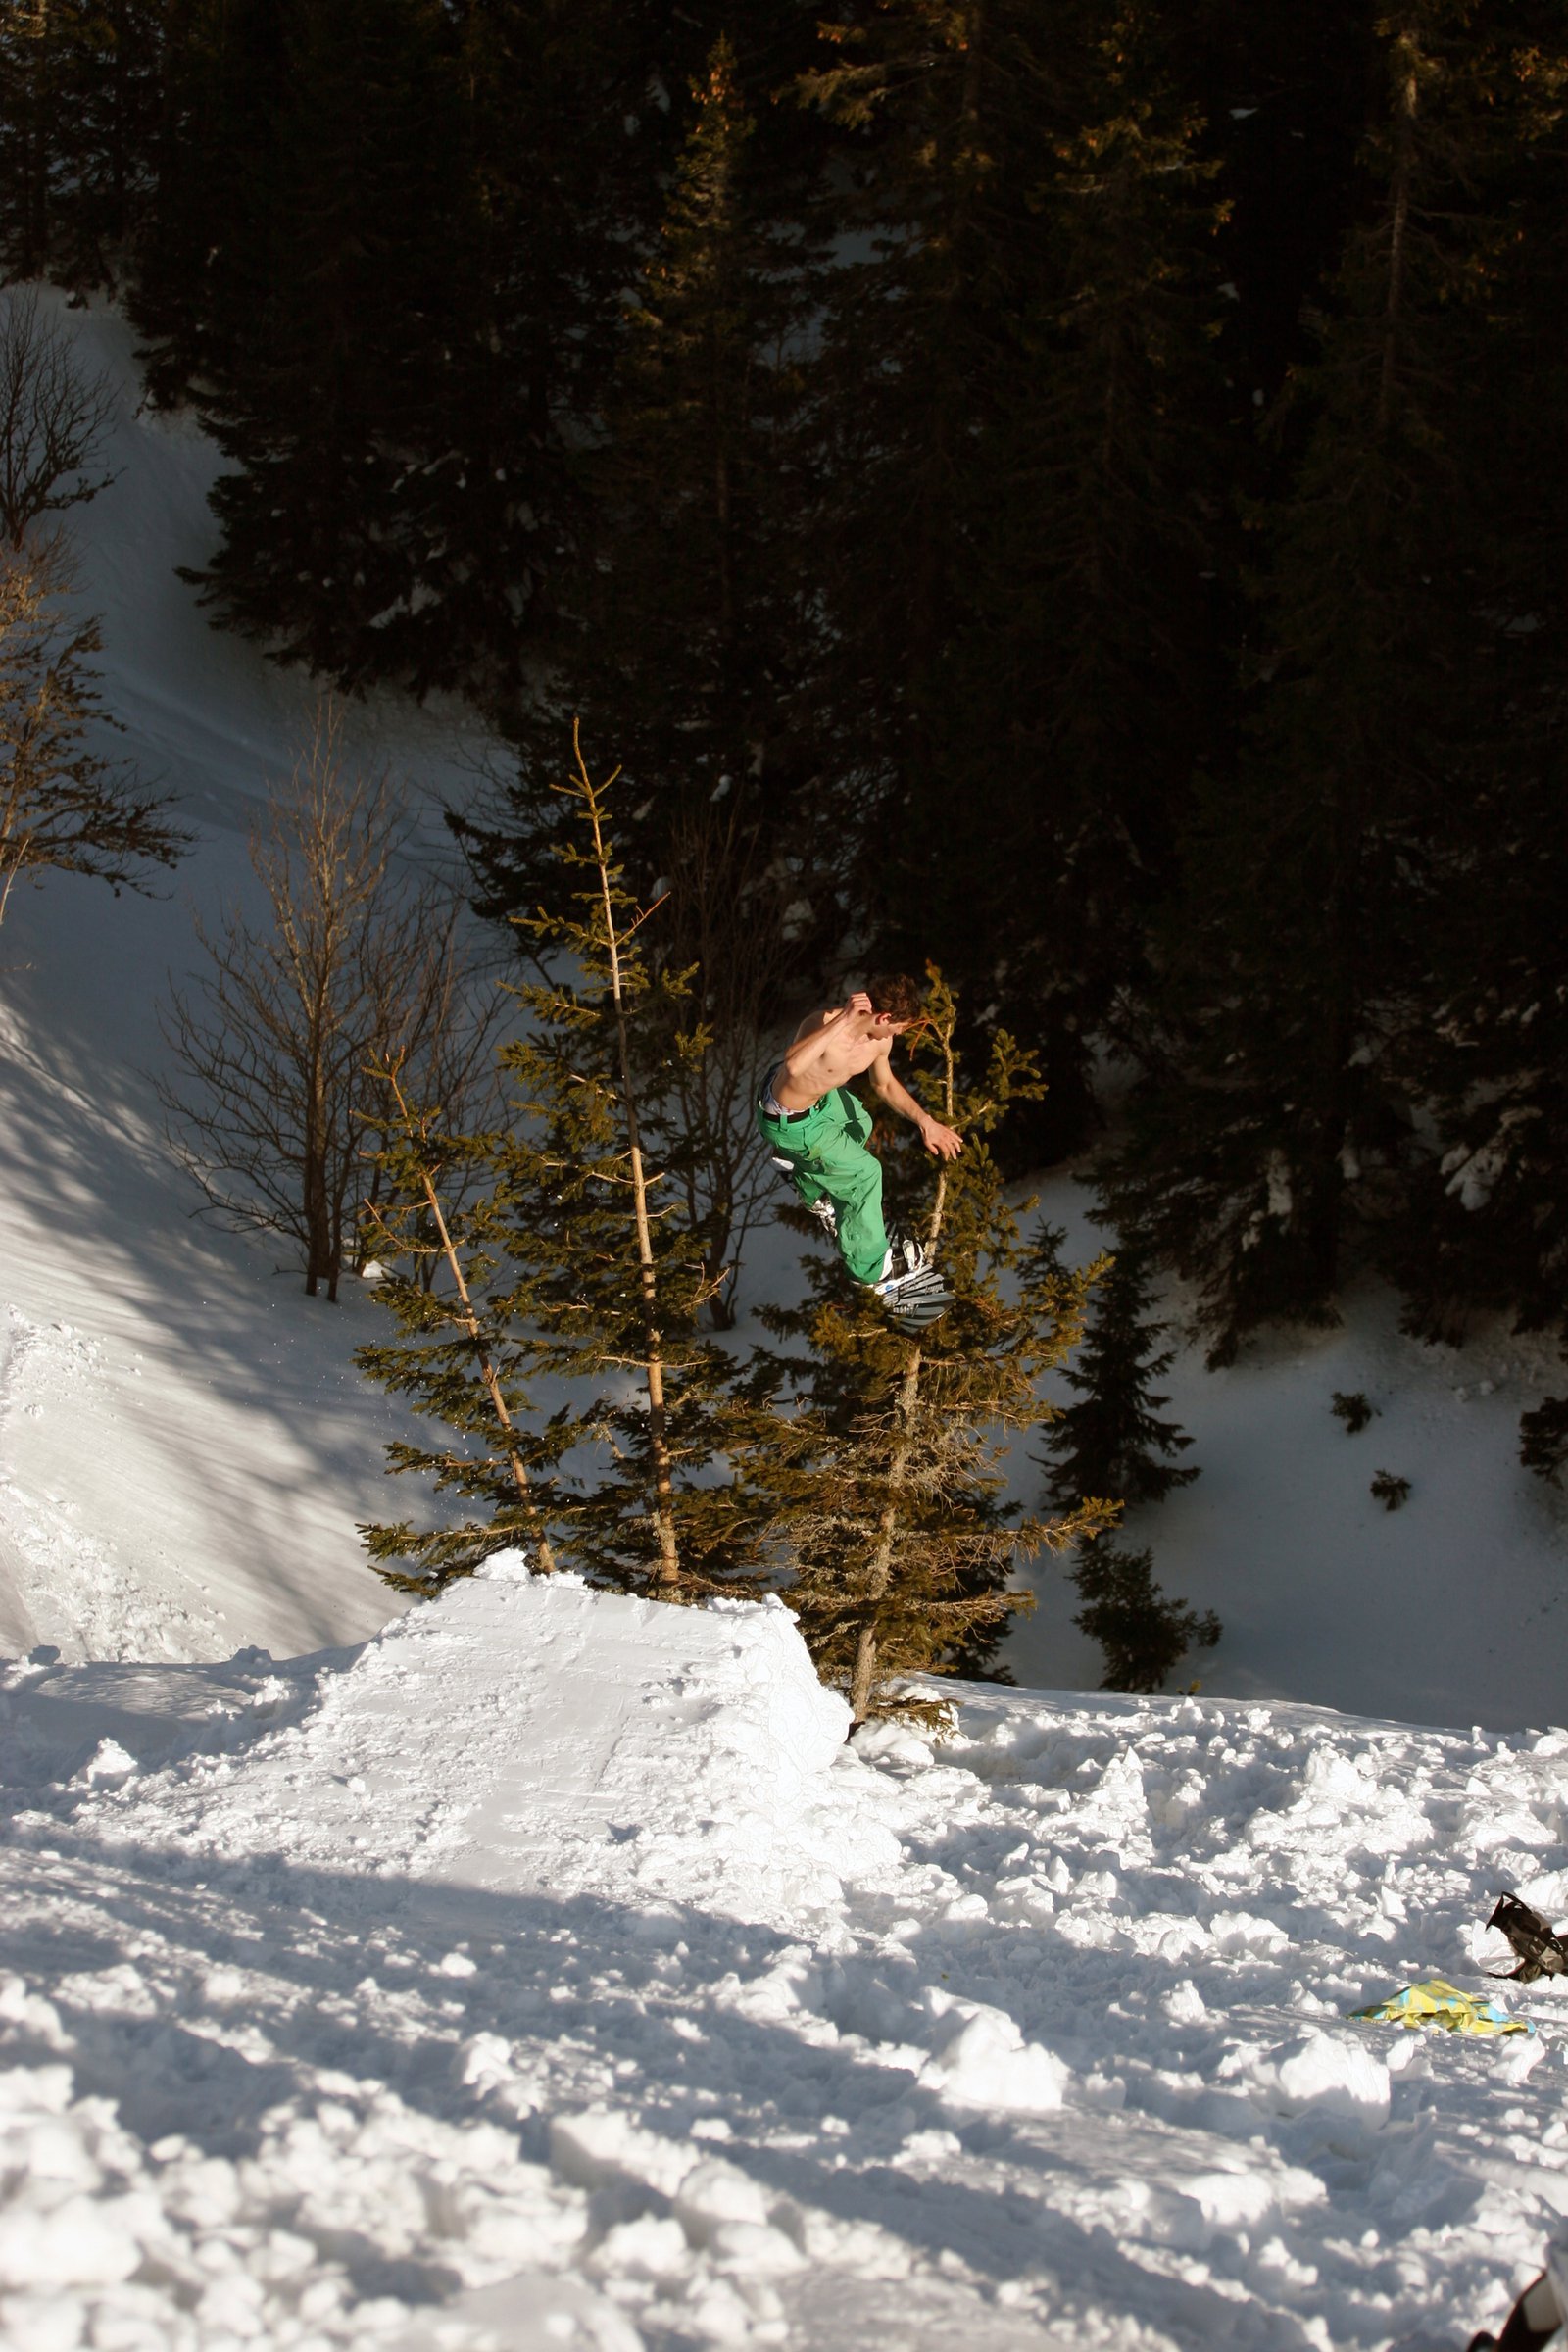 Snowboard treebonk #1